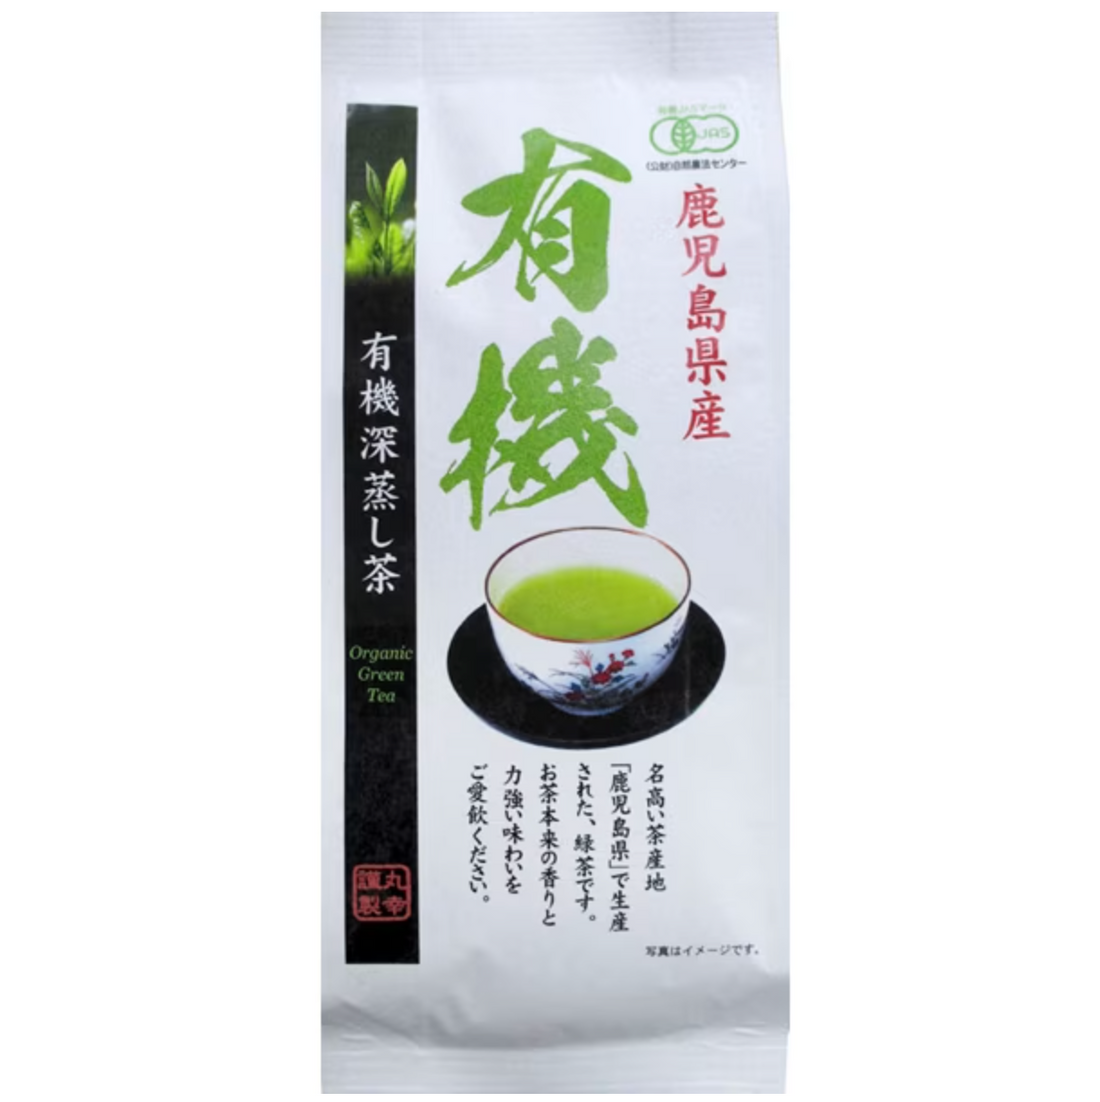 Ochanomaruko Organic Deep Steamed Tea from Kagoshima Prefecture 100g